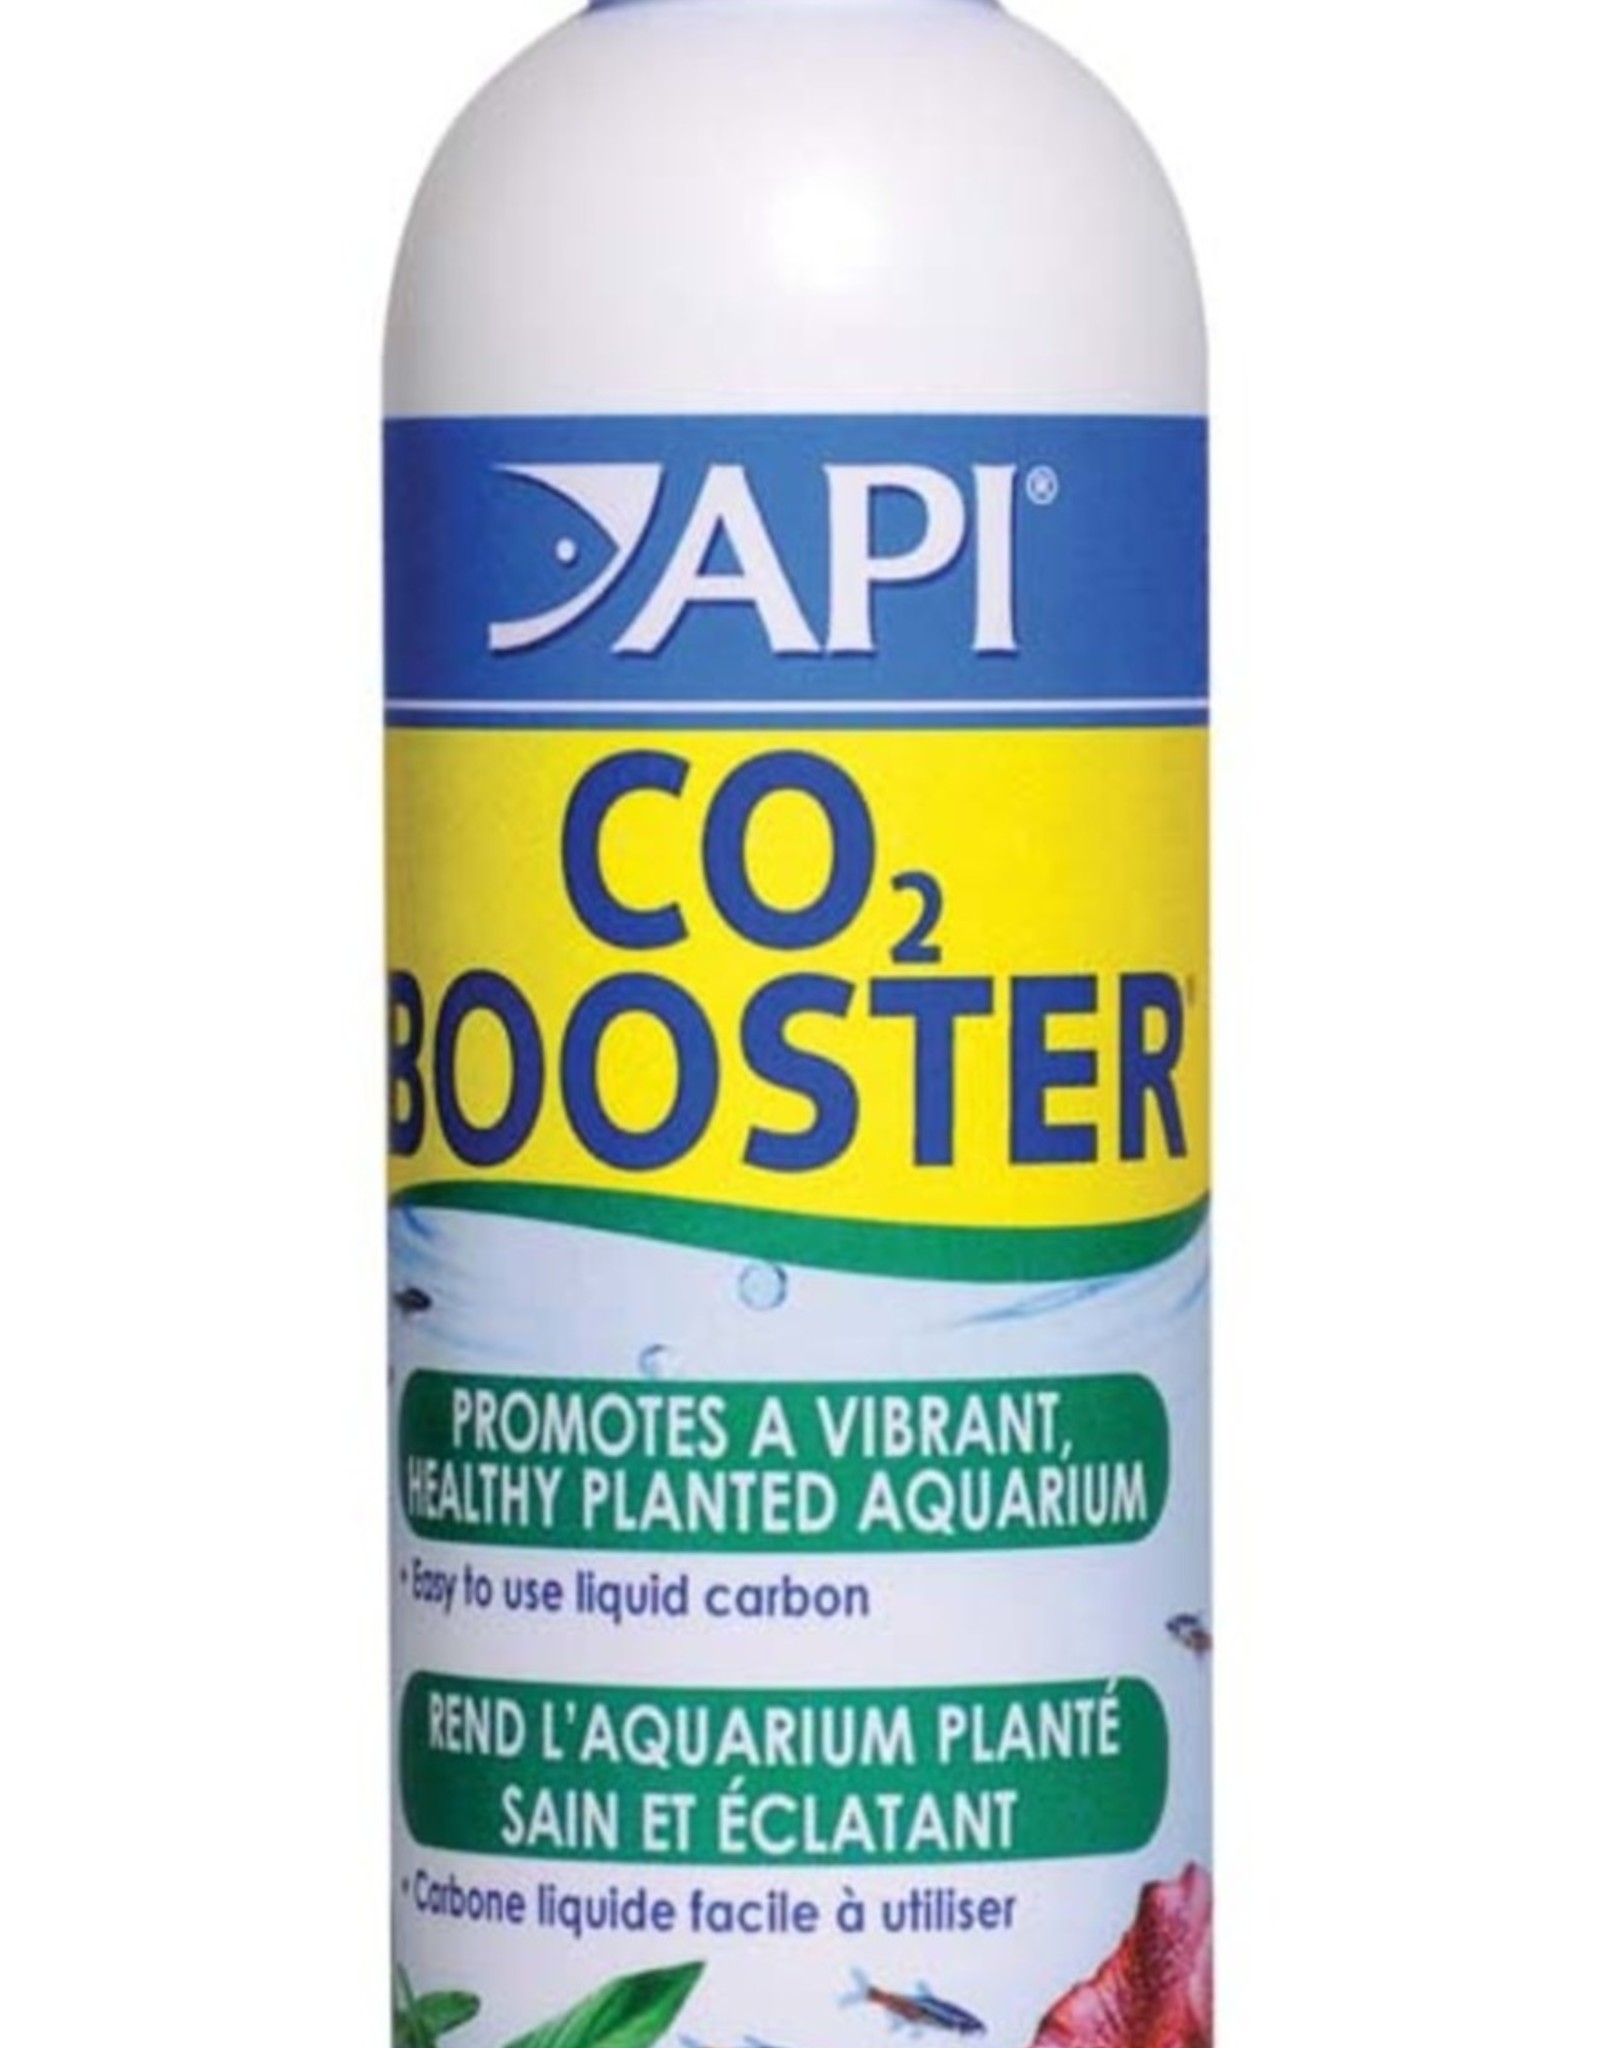 API API CO2 Booster Plant Supplement 8 fl oz